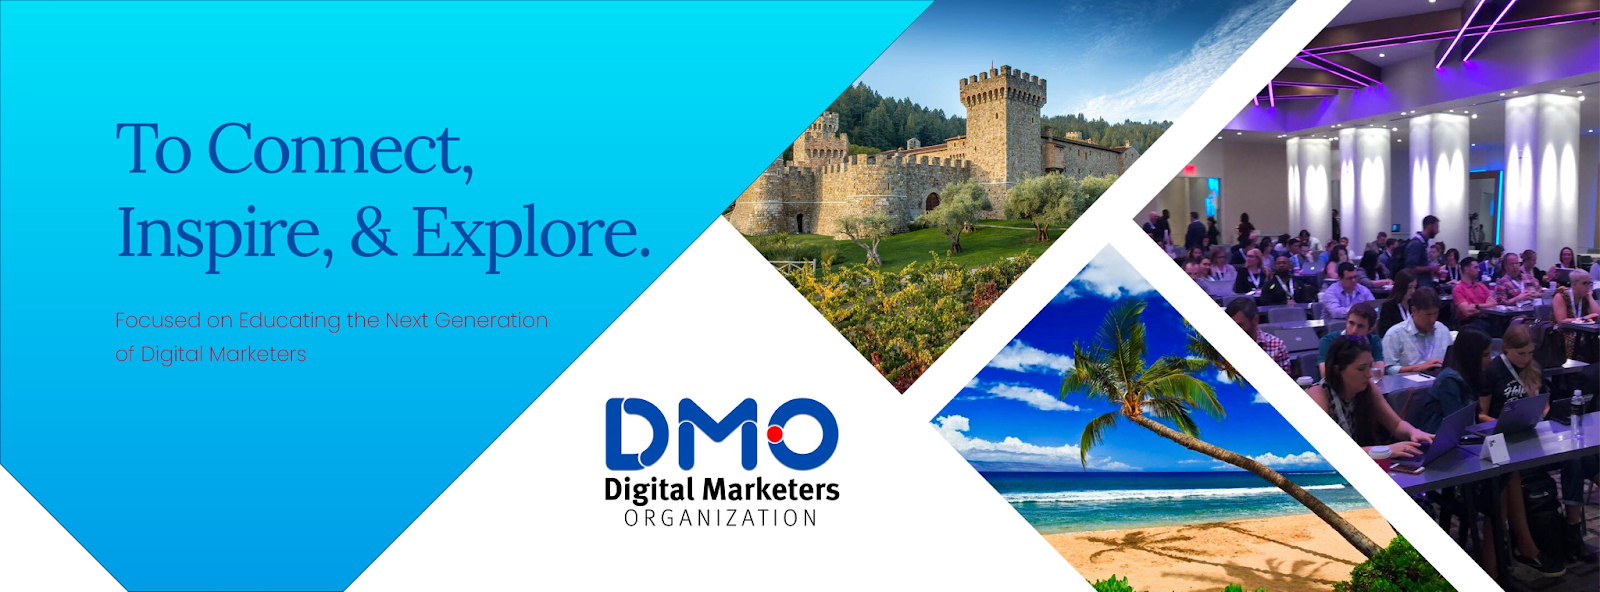 DMO-Marketing-Conference